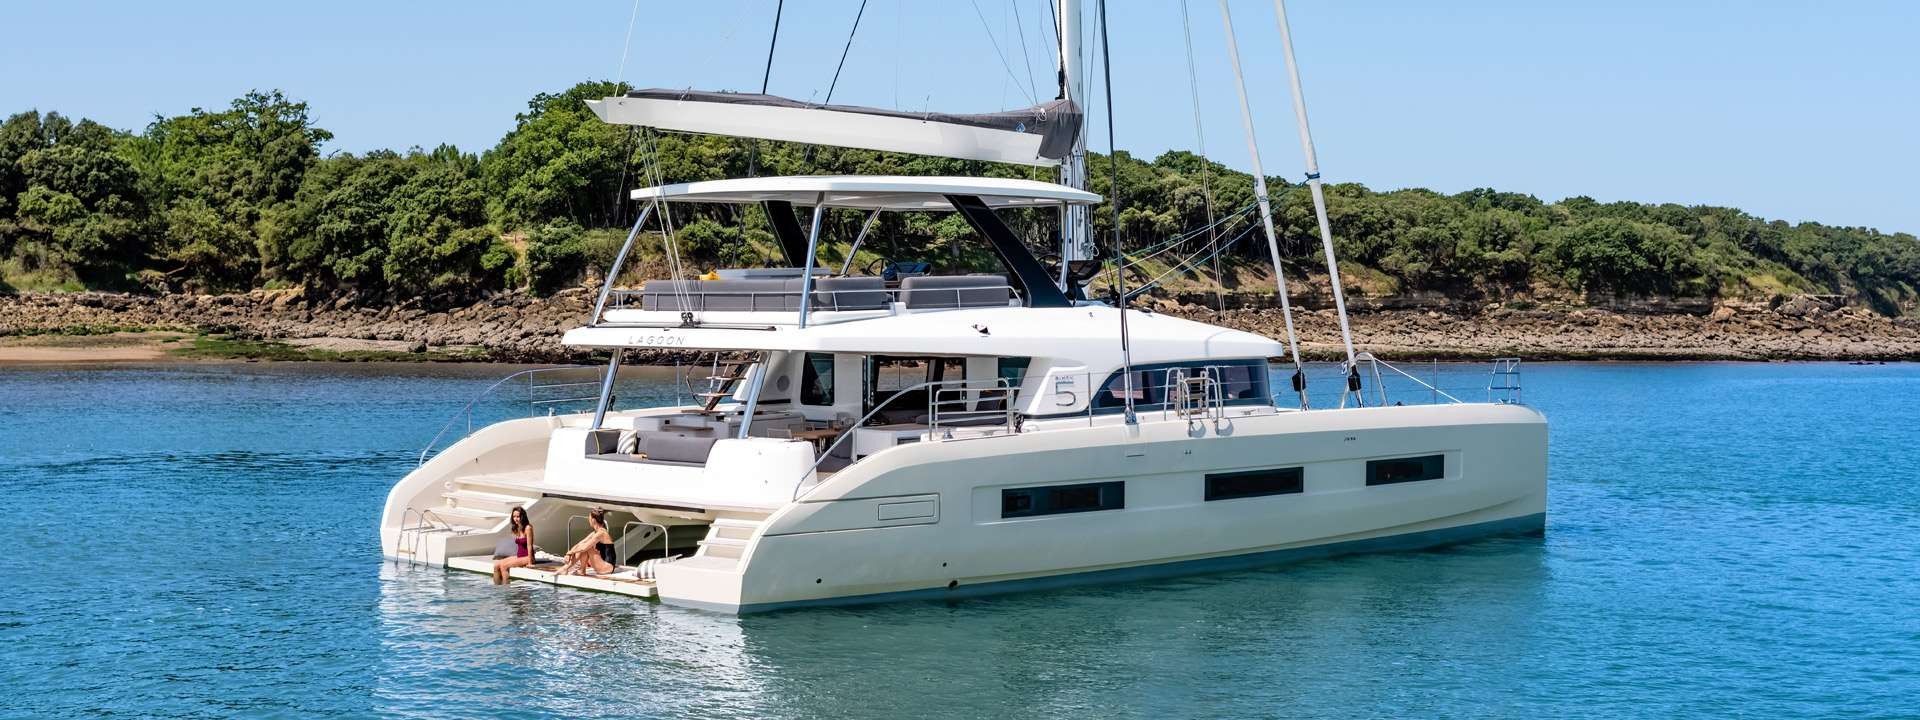 yacht-165251